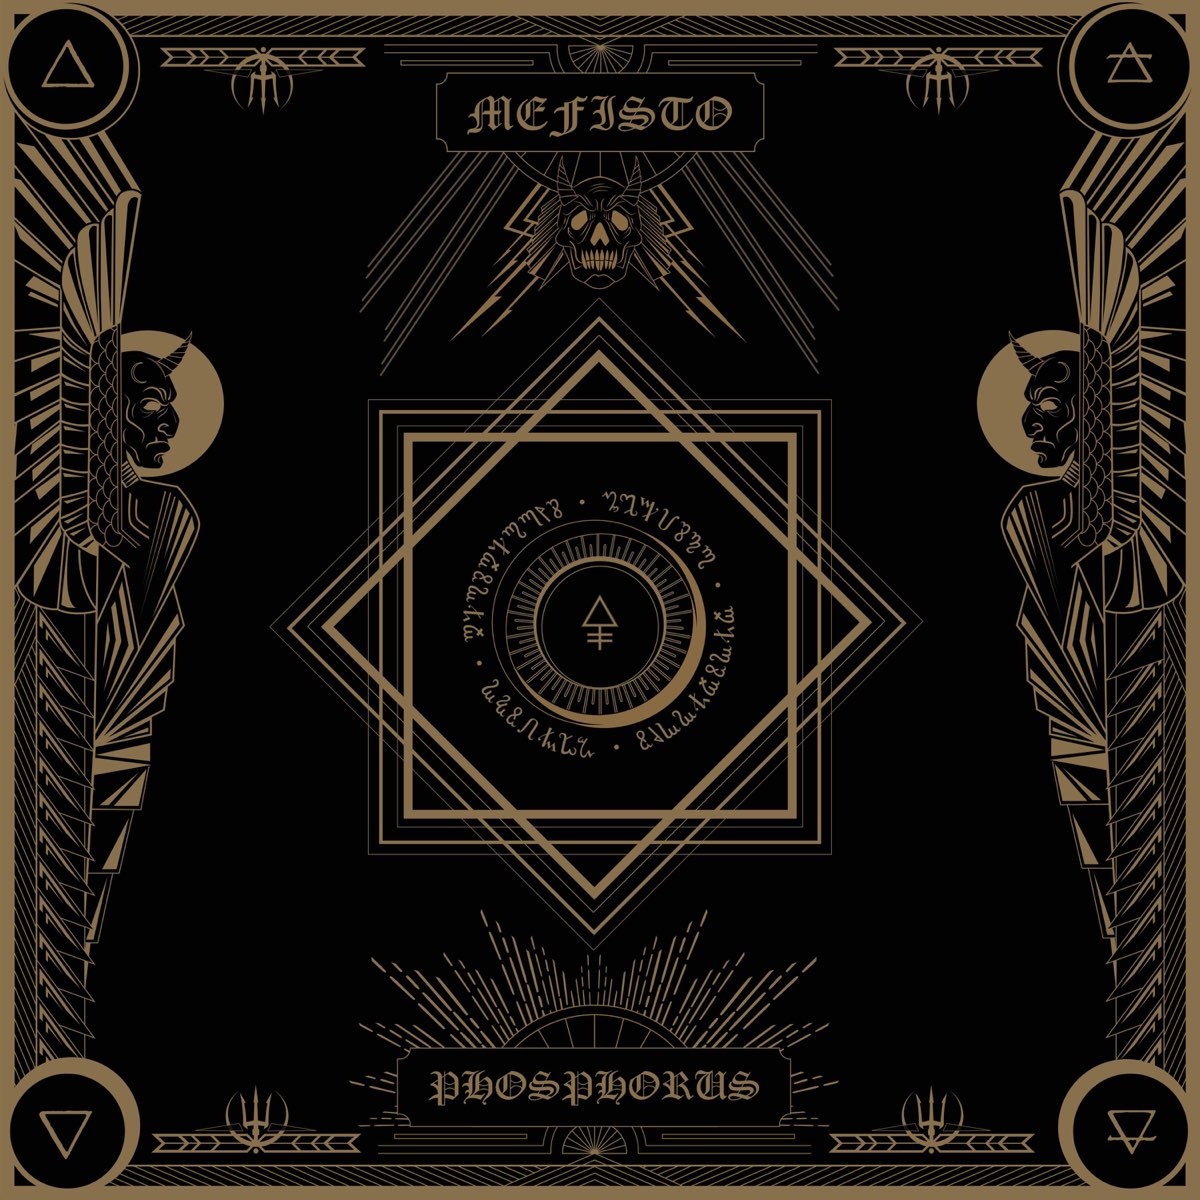 Mefisto - "Phosphorus" - 2022